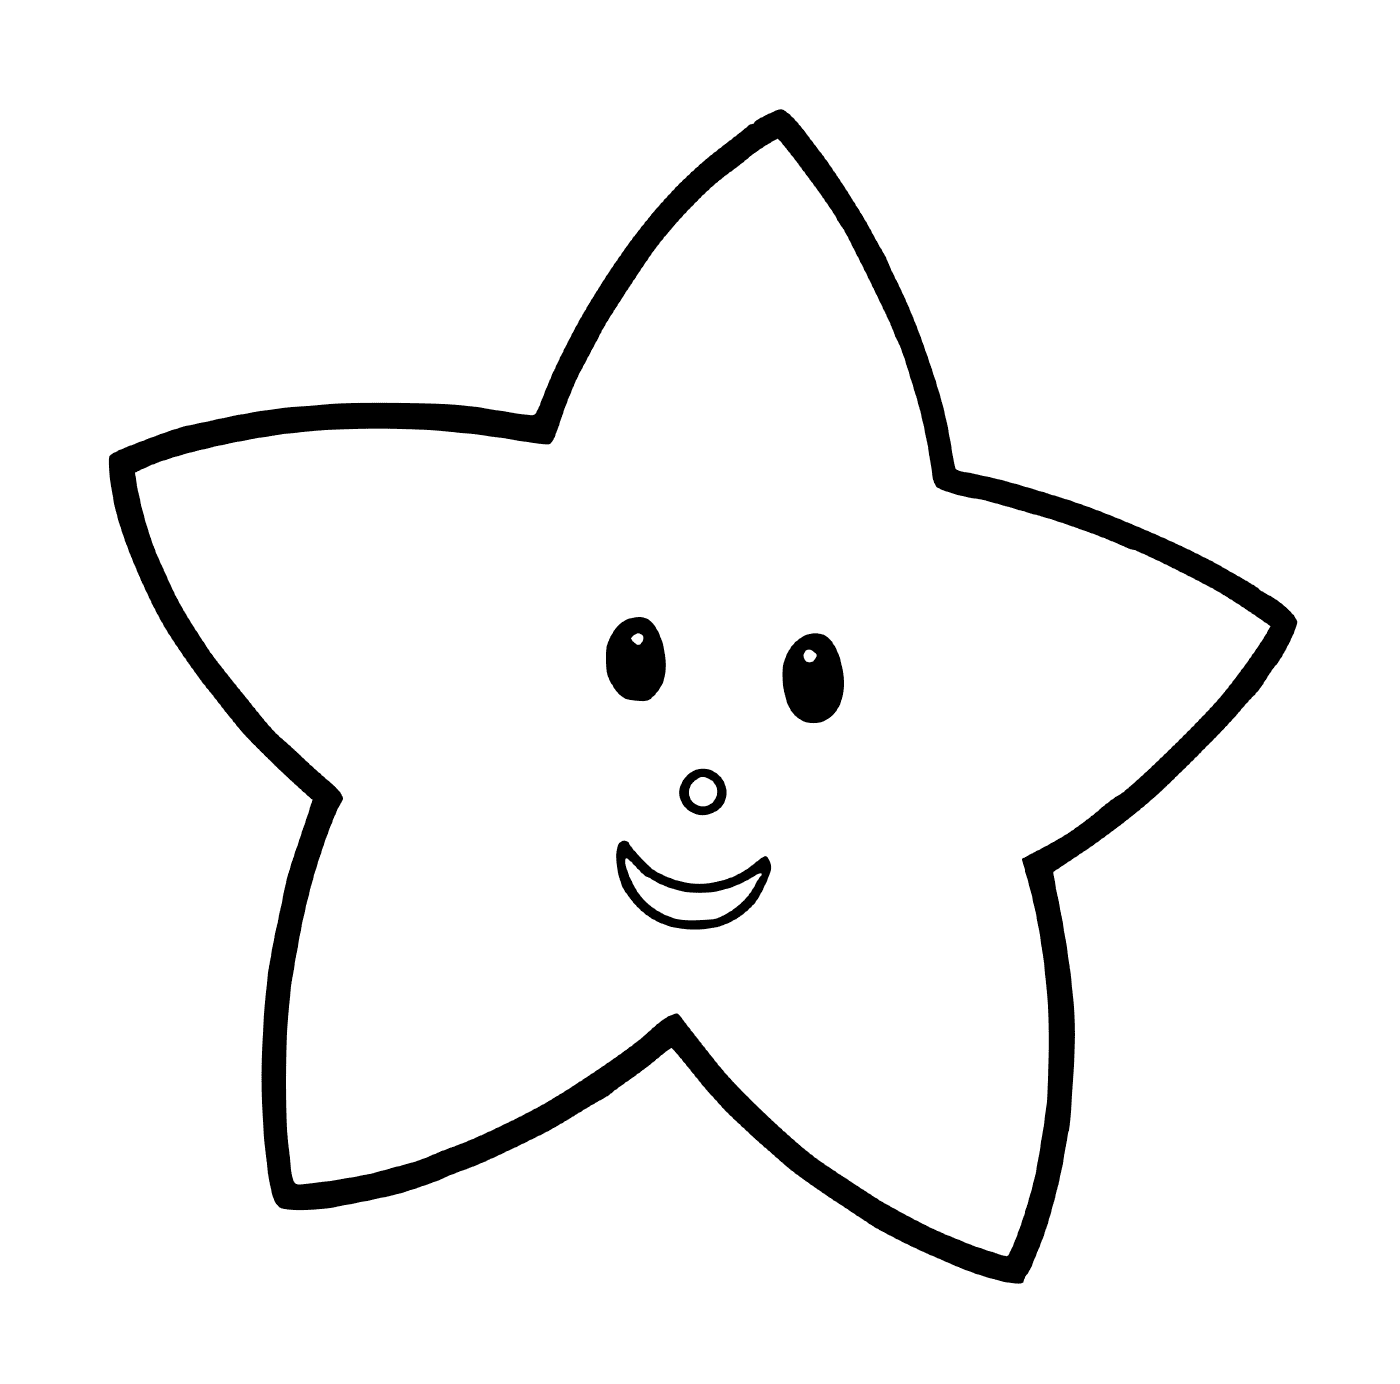  A child-friendly star 